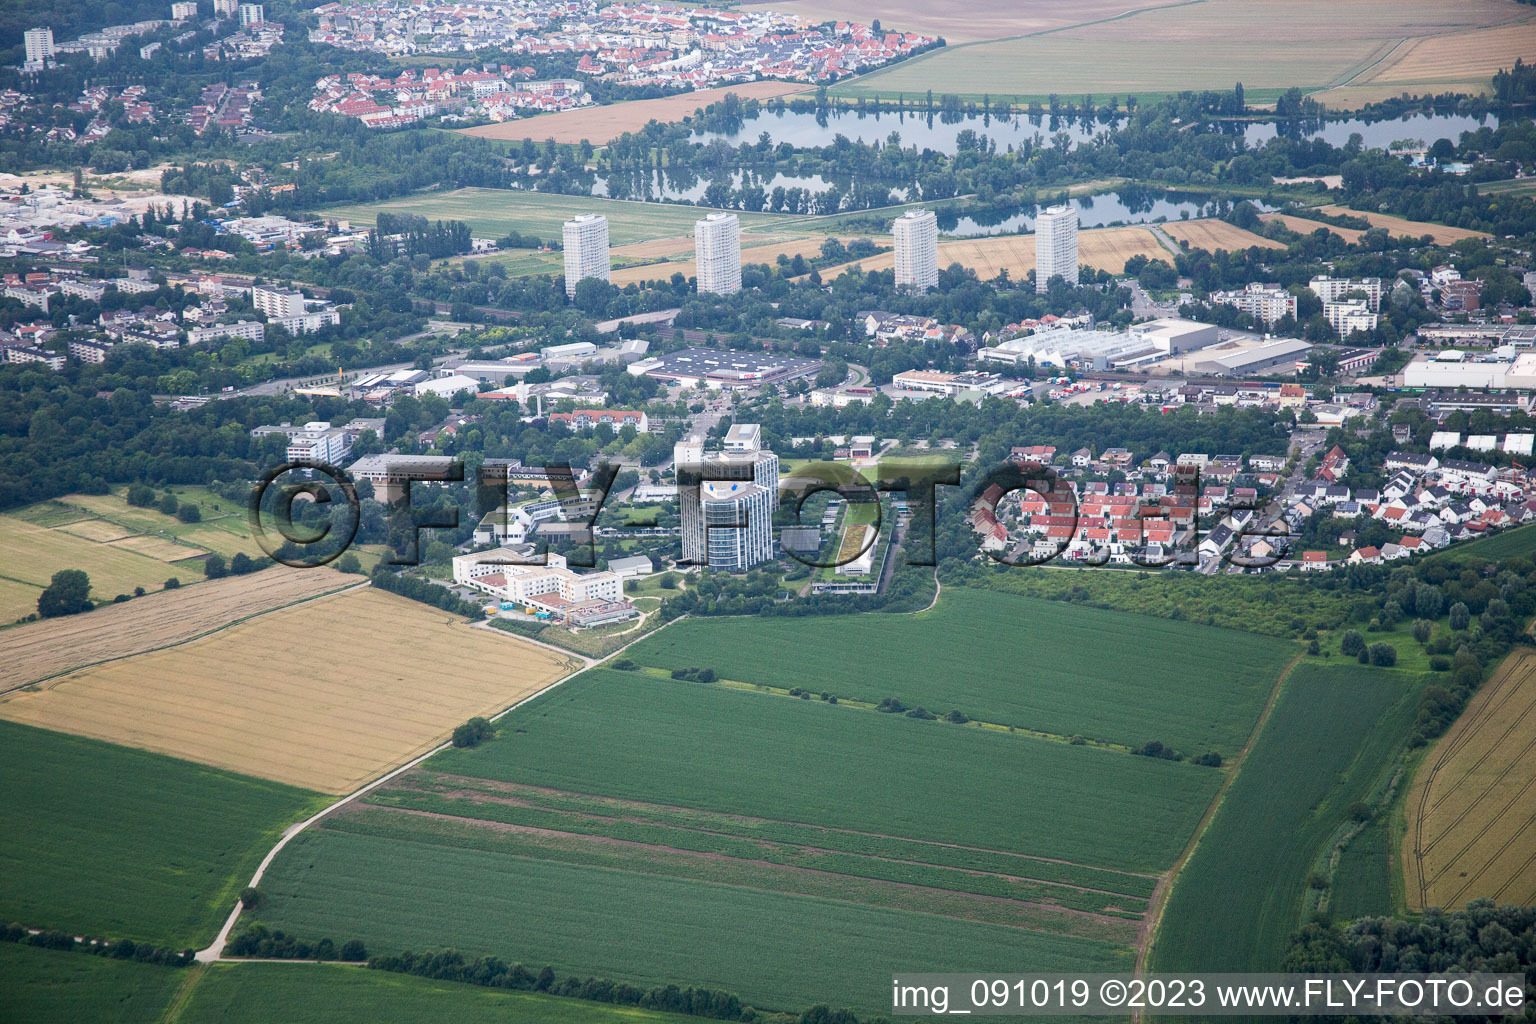 Vue aérienne de Quartier Oggersheim in Ludwigshafen am Rhein dans le département Rhénanie-Palatinat, Allemagne